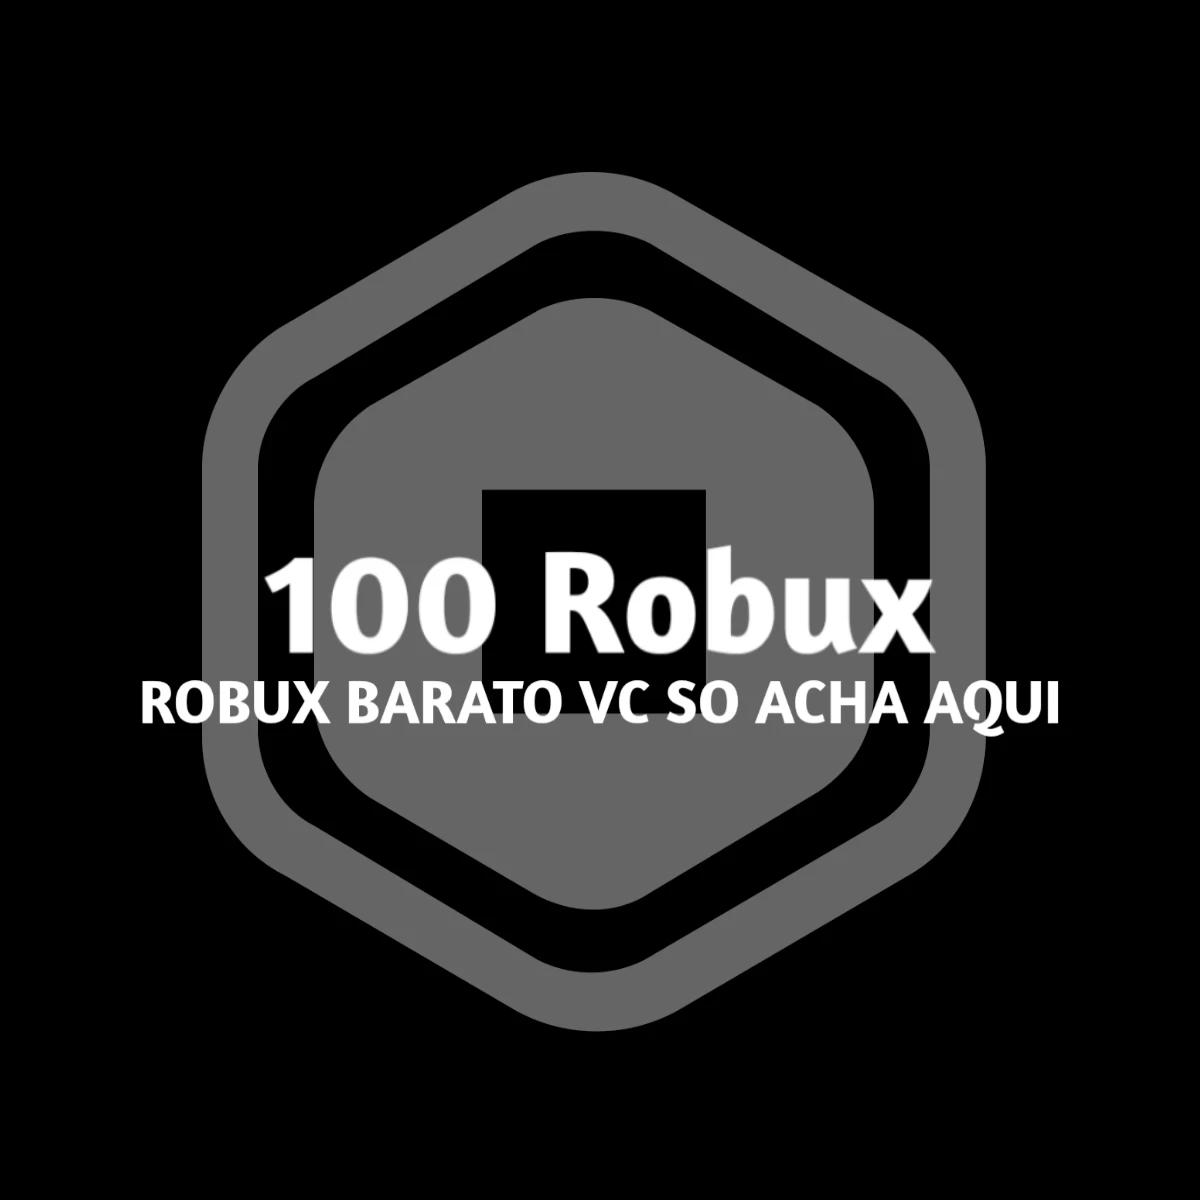 100 ROBUX - ENTREGA IMEDIATA 24 HORAS - Roblox - Robux - GGMAX